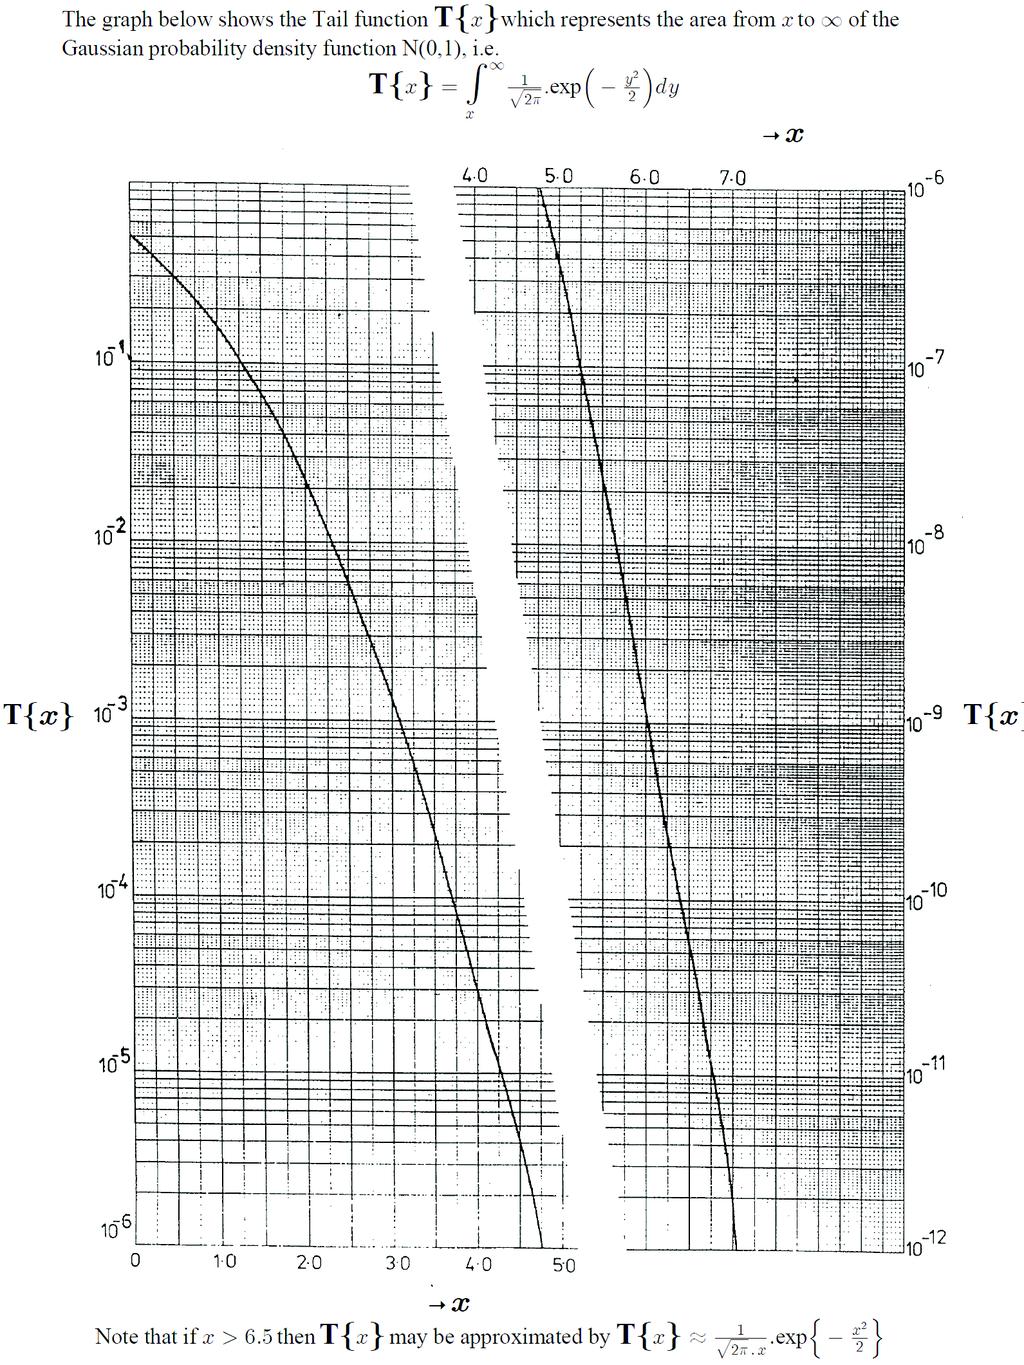 Appendices C: Tail Function Graph Prof. A.